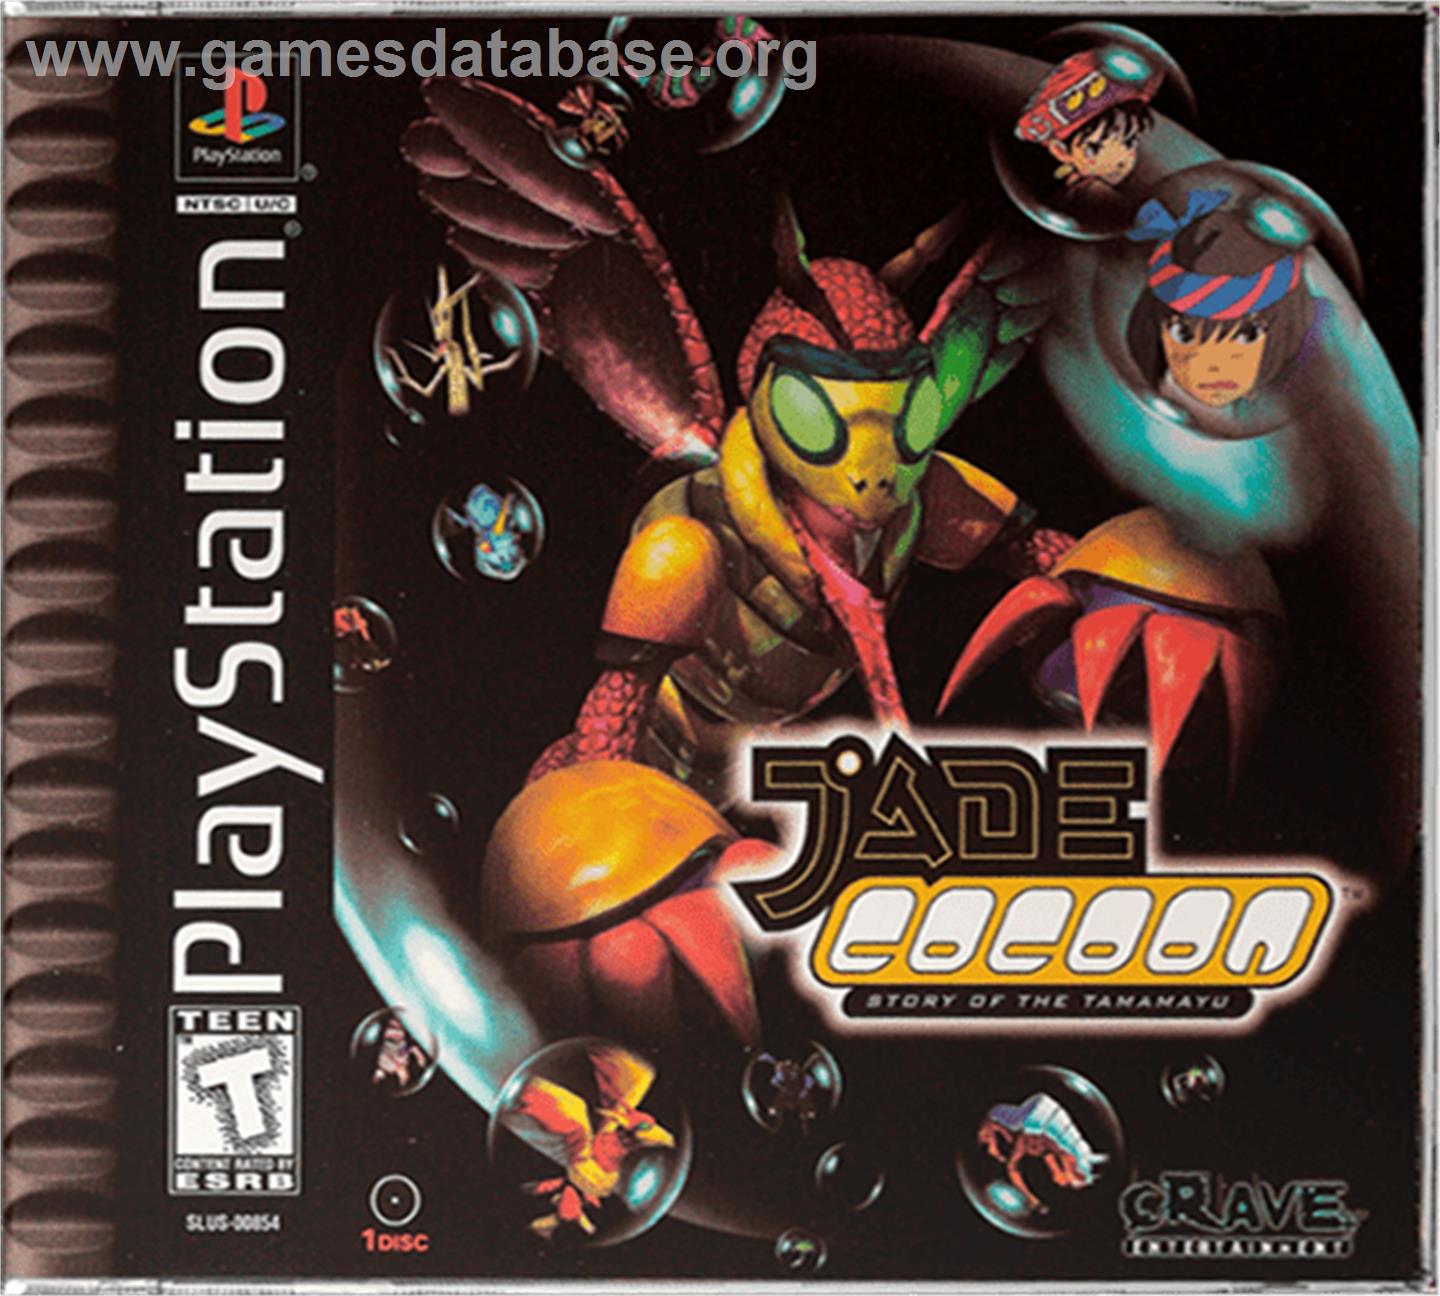 Jade Cocoon: Story of the Tamamayu - Sony Playstation - Artwork - Box